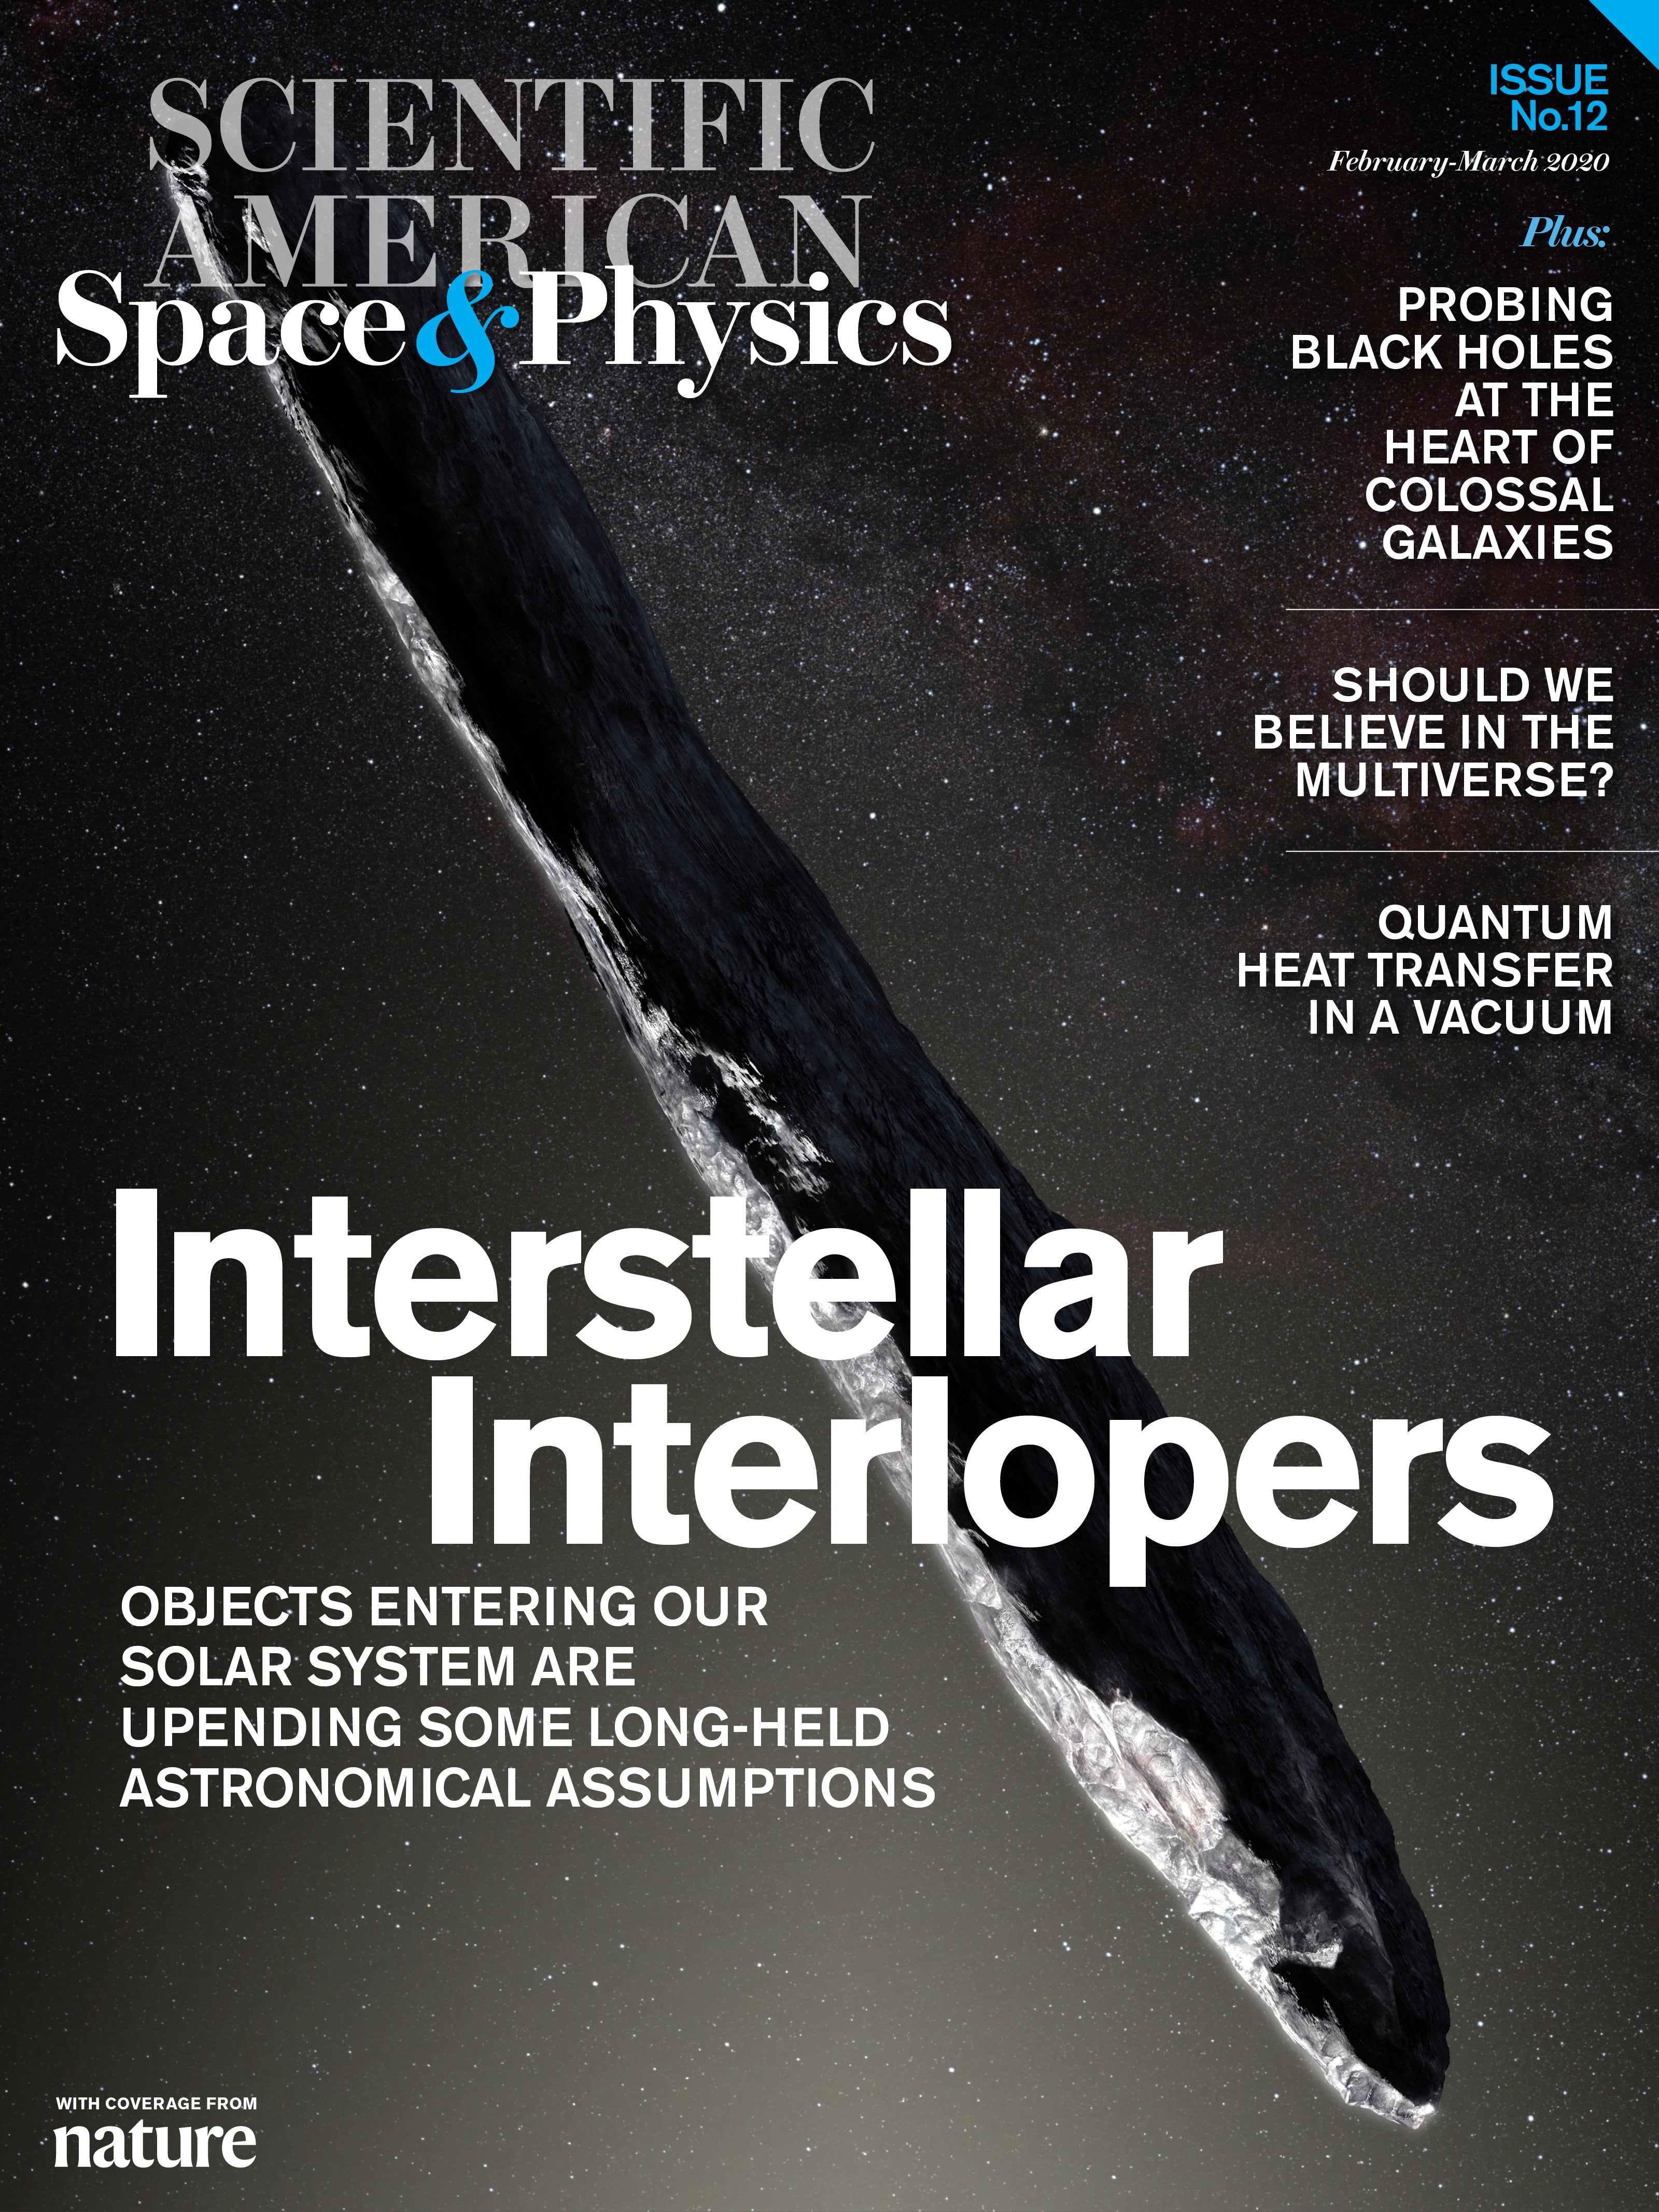 Scientific American Space & Physics: Interstellar Interlopers